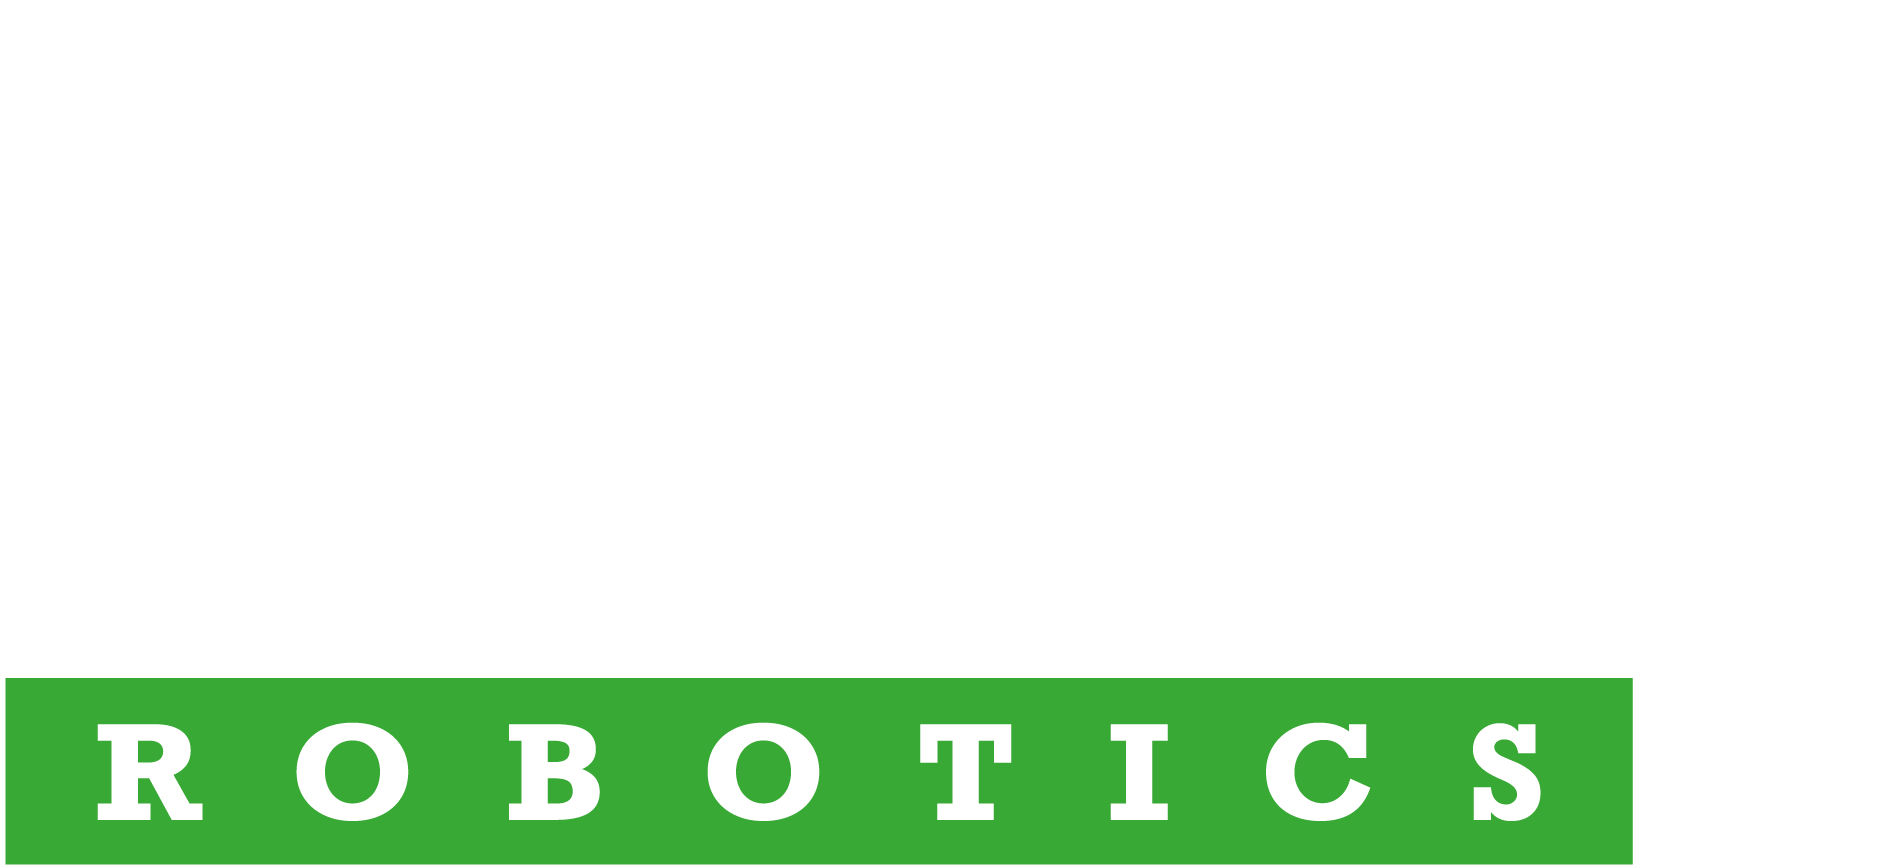 Cibo Robotics